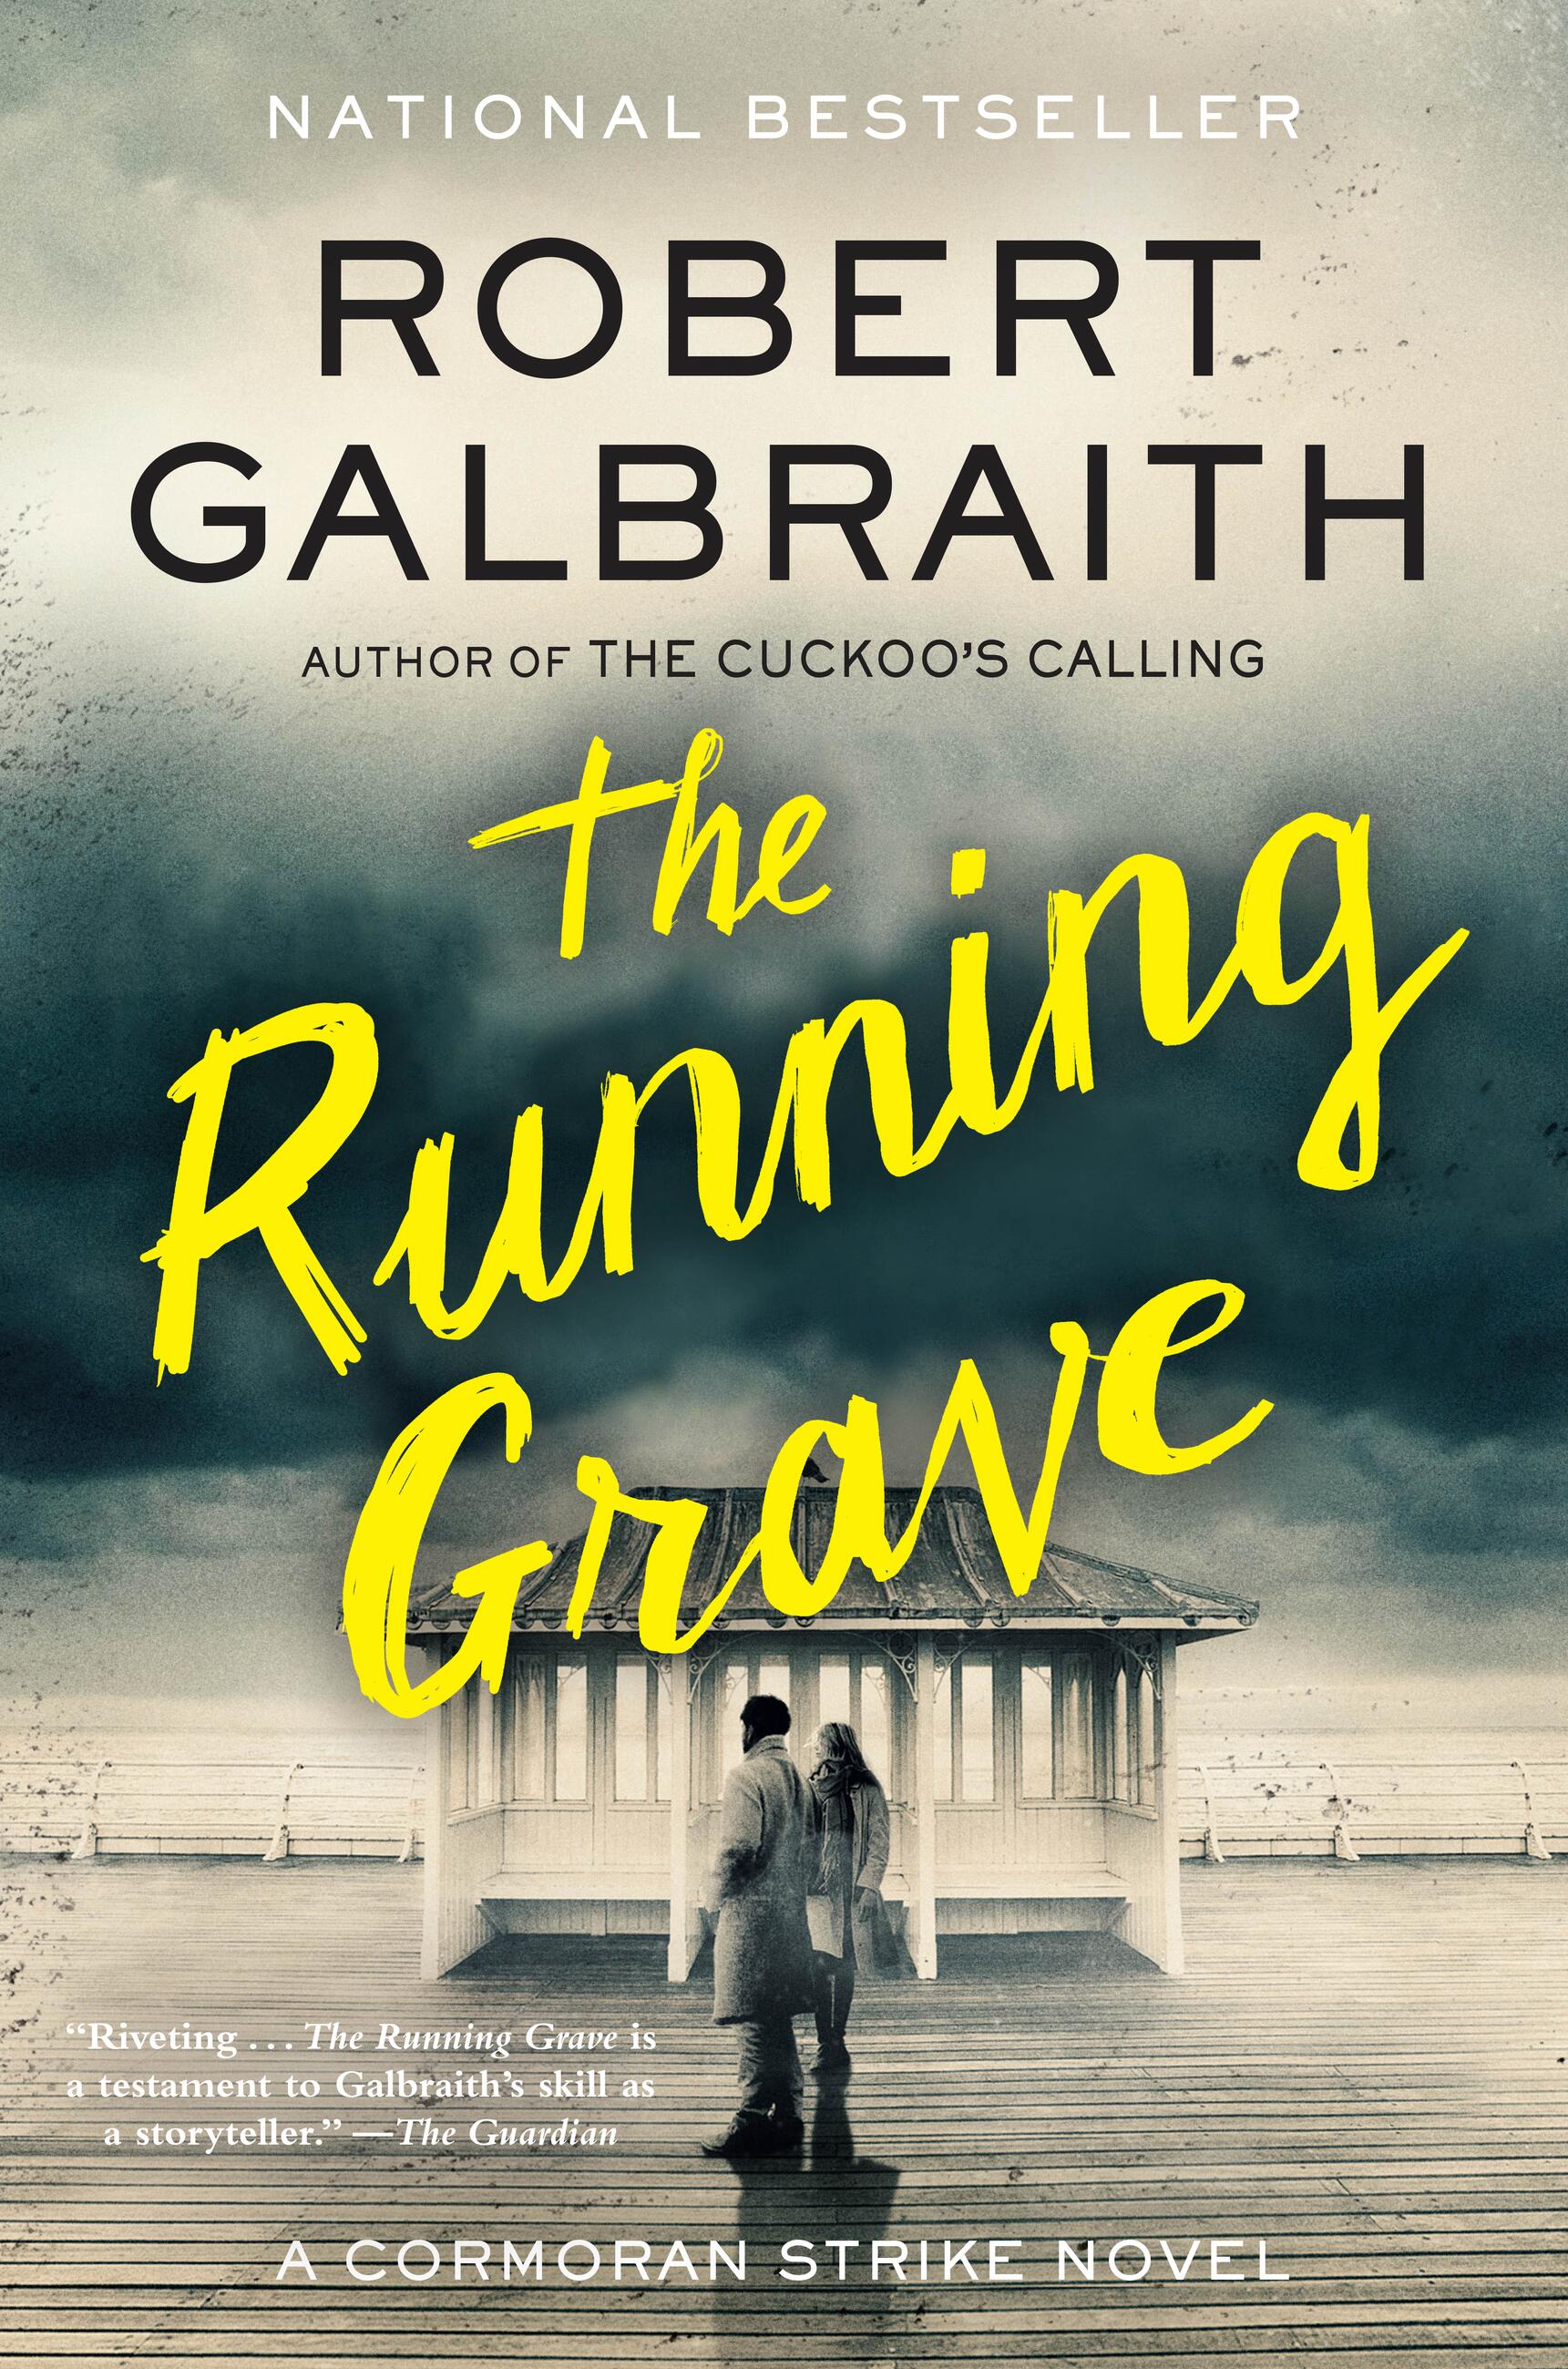 Image de couverture de The Running Grave [electronic resource] : A Cormoran Strike Novel